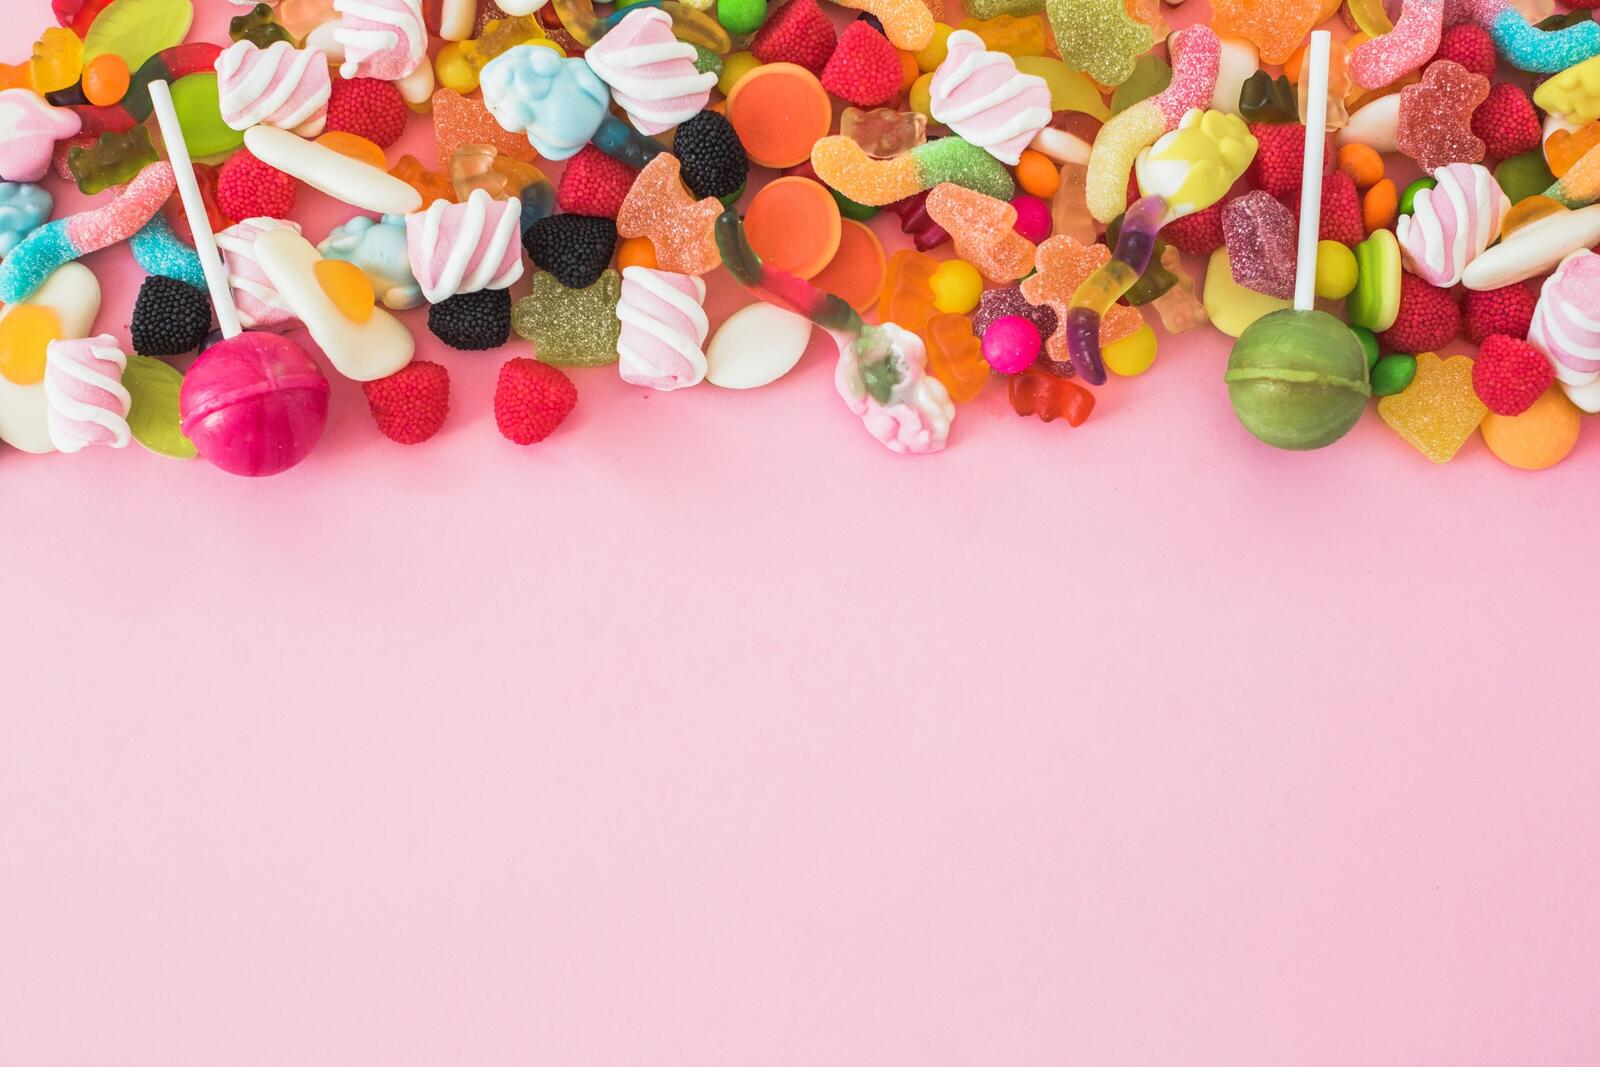 Wallpapers wallpaper candies sweets lollipops on the desktop